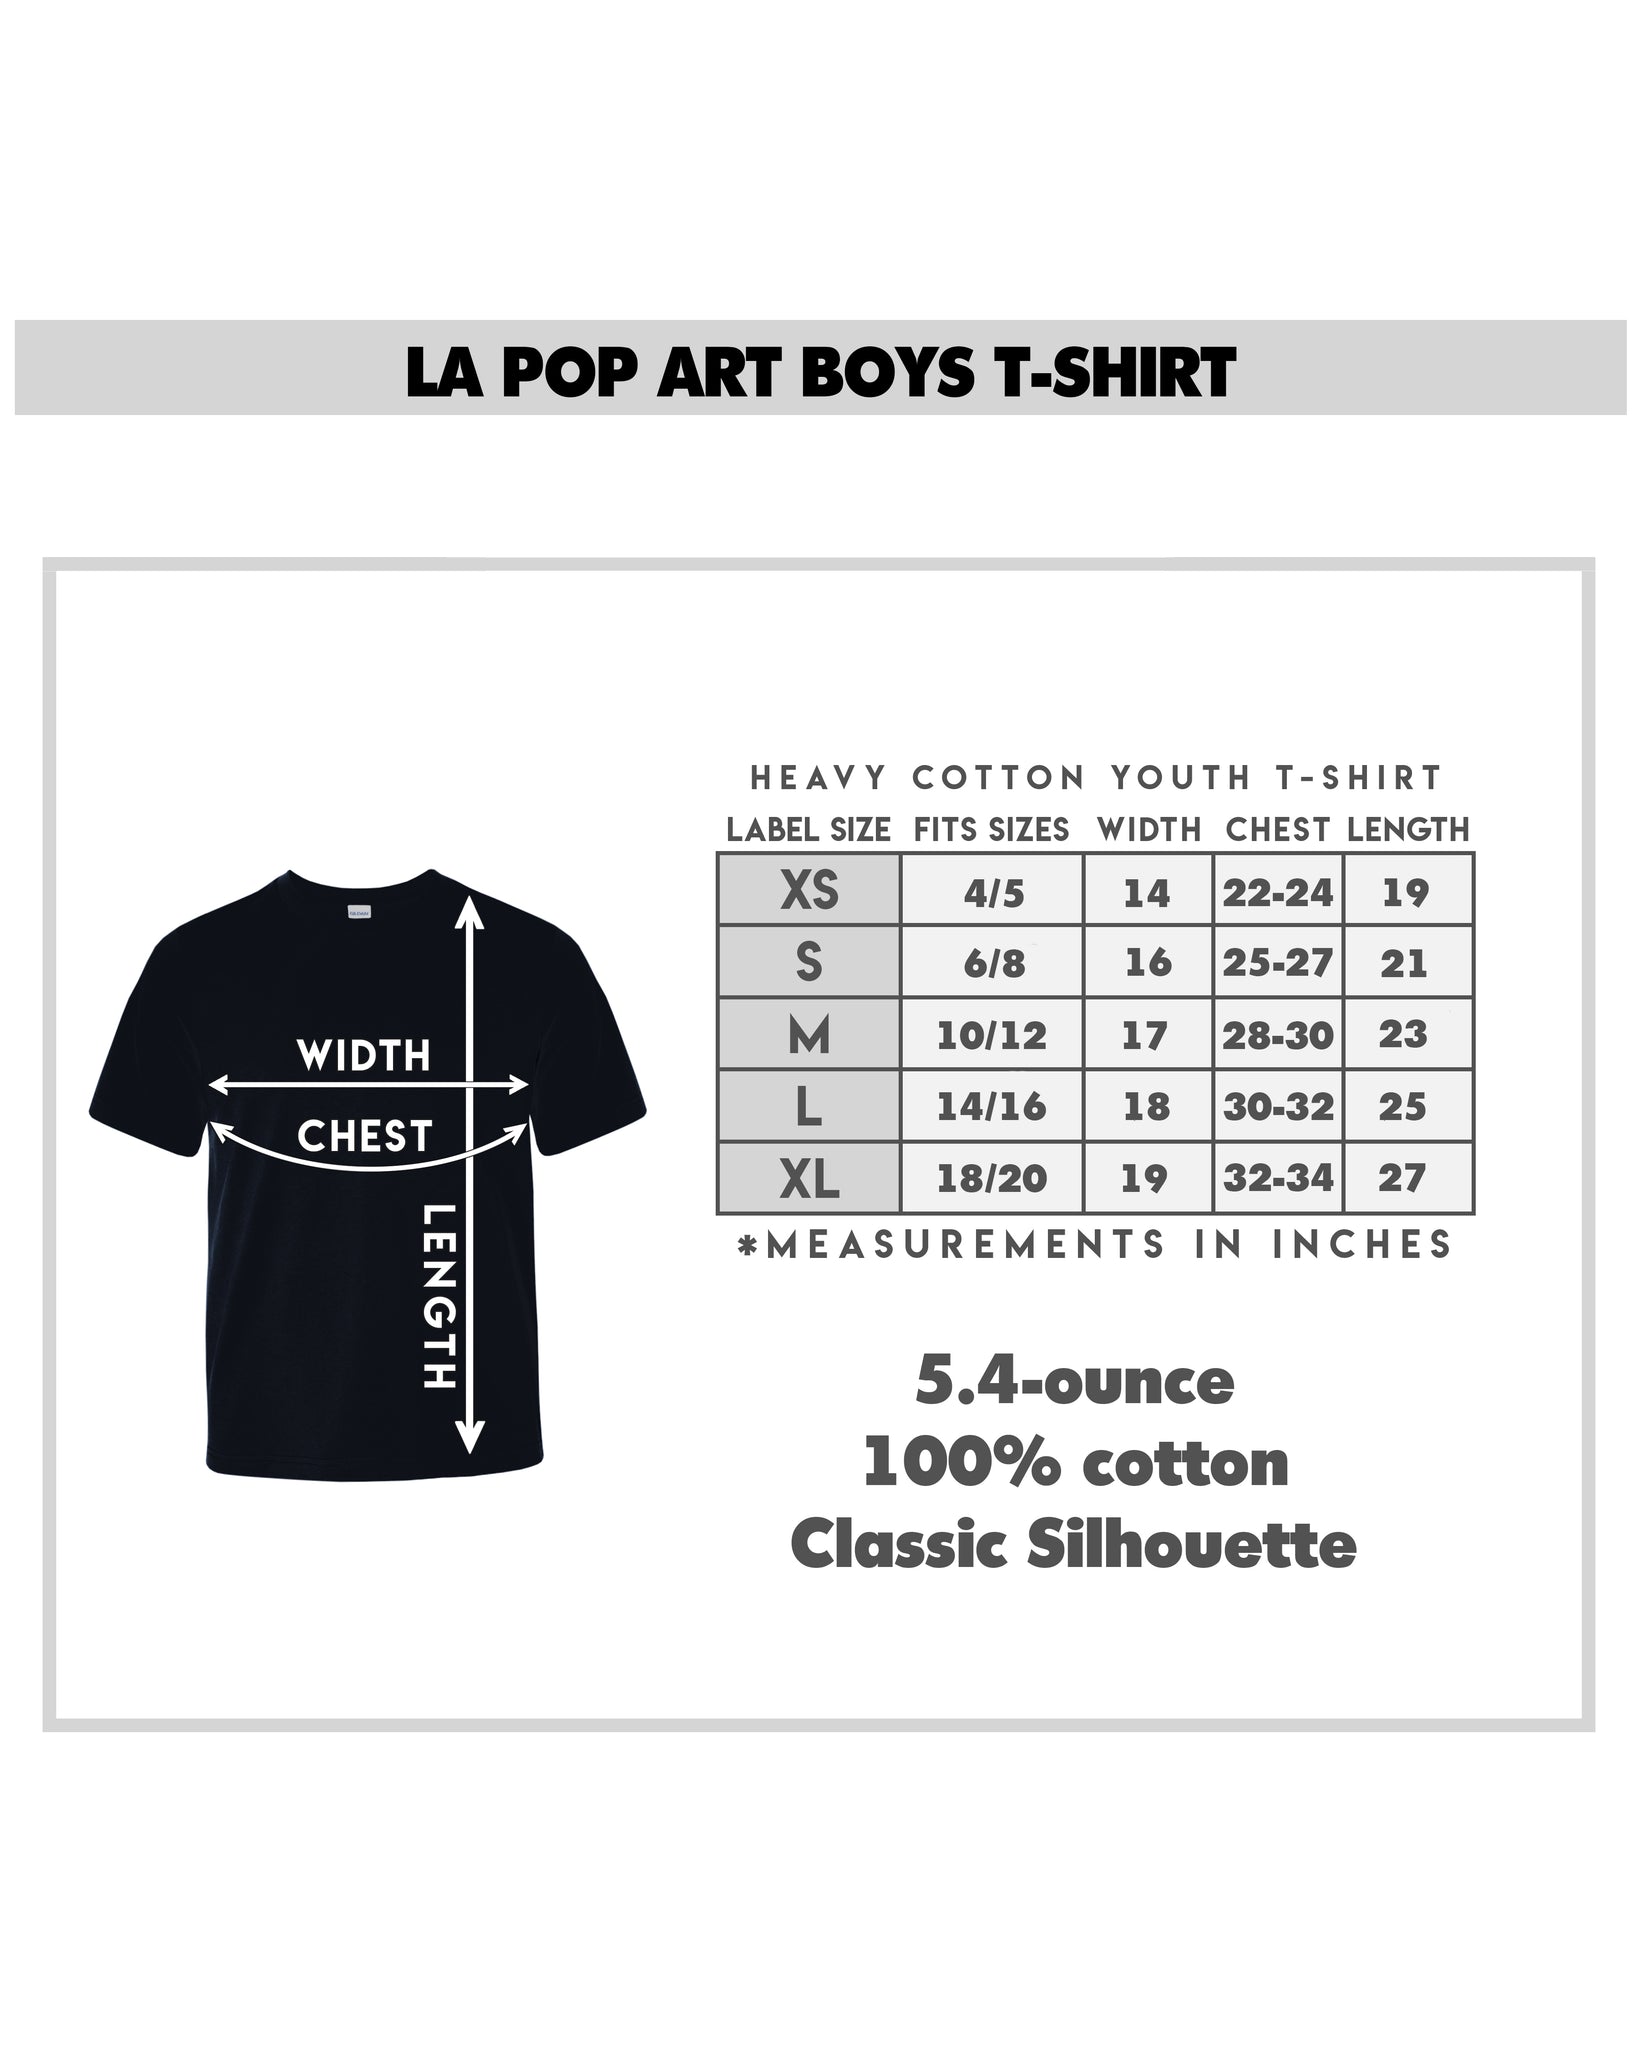 FLEUR DE LIS POPULAR LOUISIANA CITIES - Girl's Word Art T-Shirt – LA Pop Art